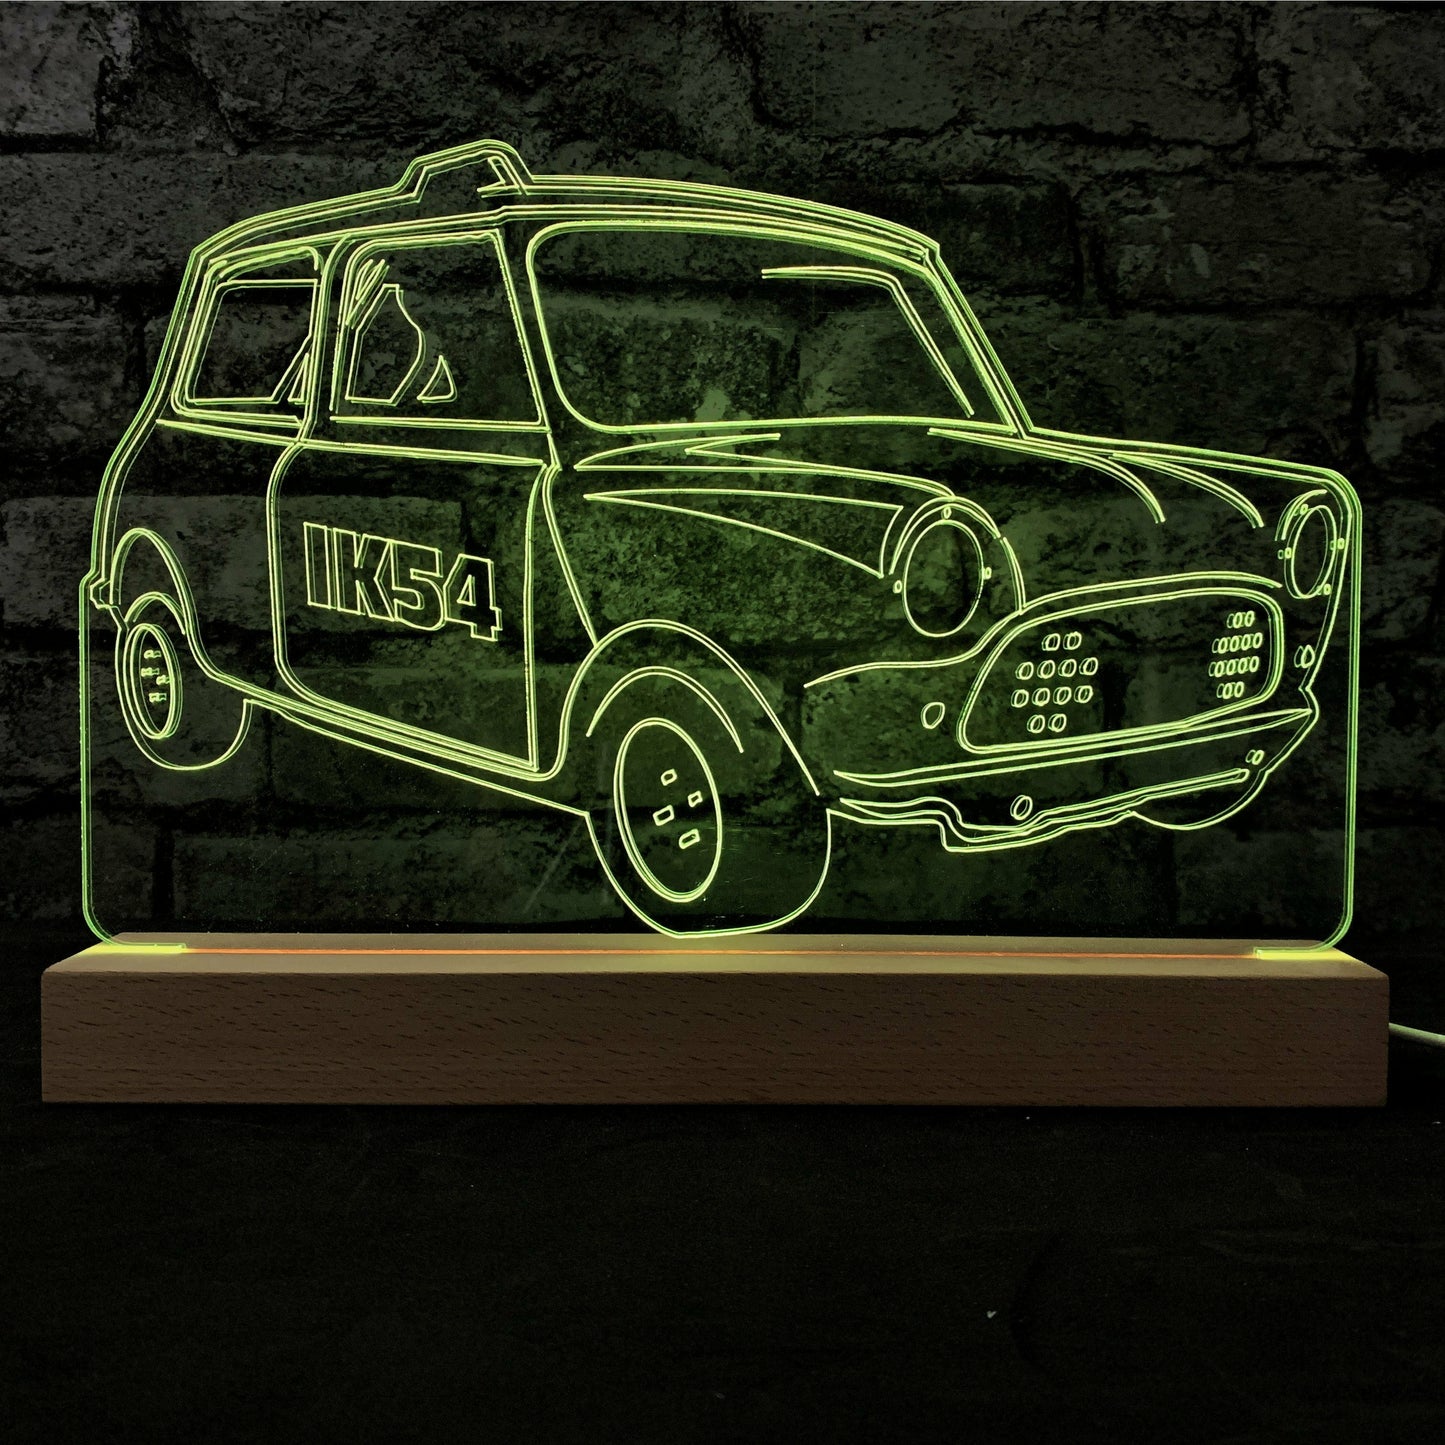 Class 1 Mini - Autograss Night Light - Night Lights & Ambient Lighting - Stock Car & Banger Toy Tracks